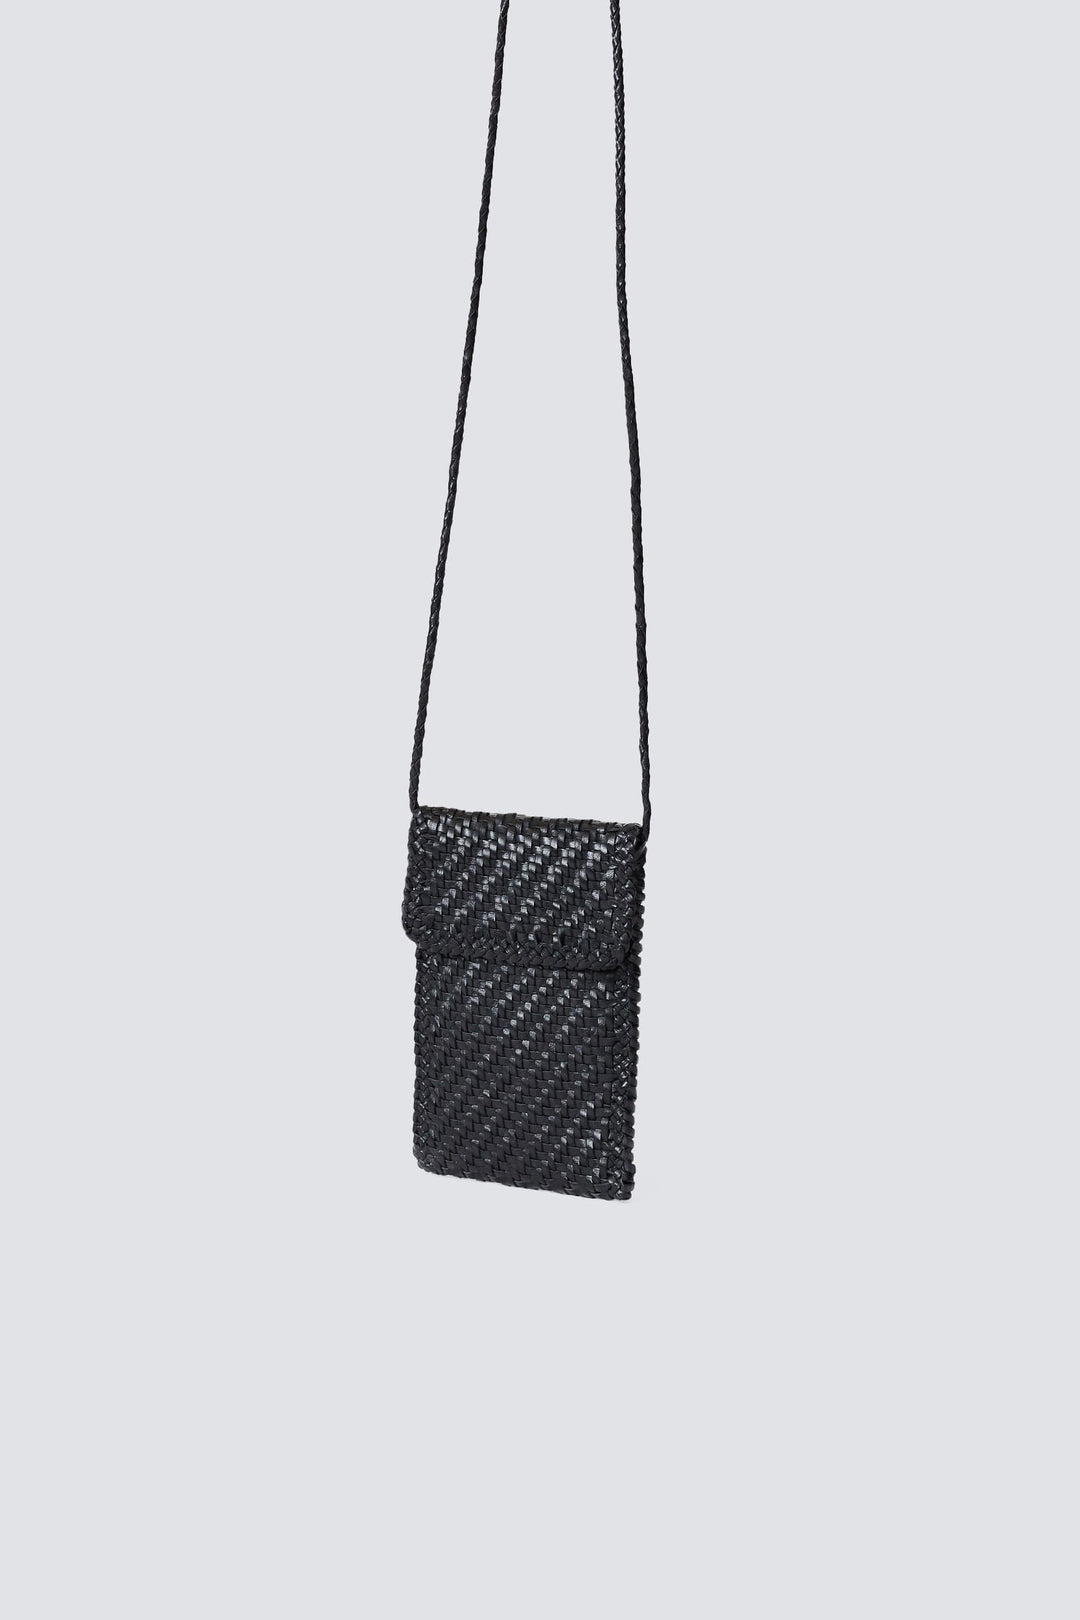 Dragon Diffusion woven leather bag handmade - Phone Crossbody Black